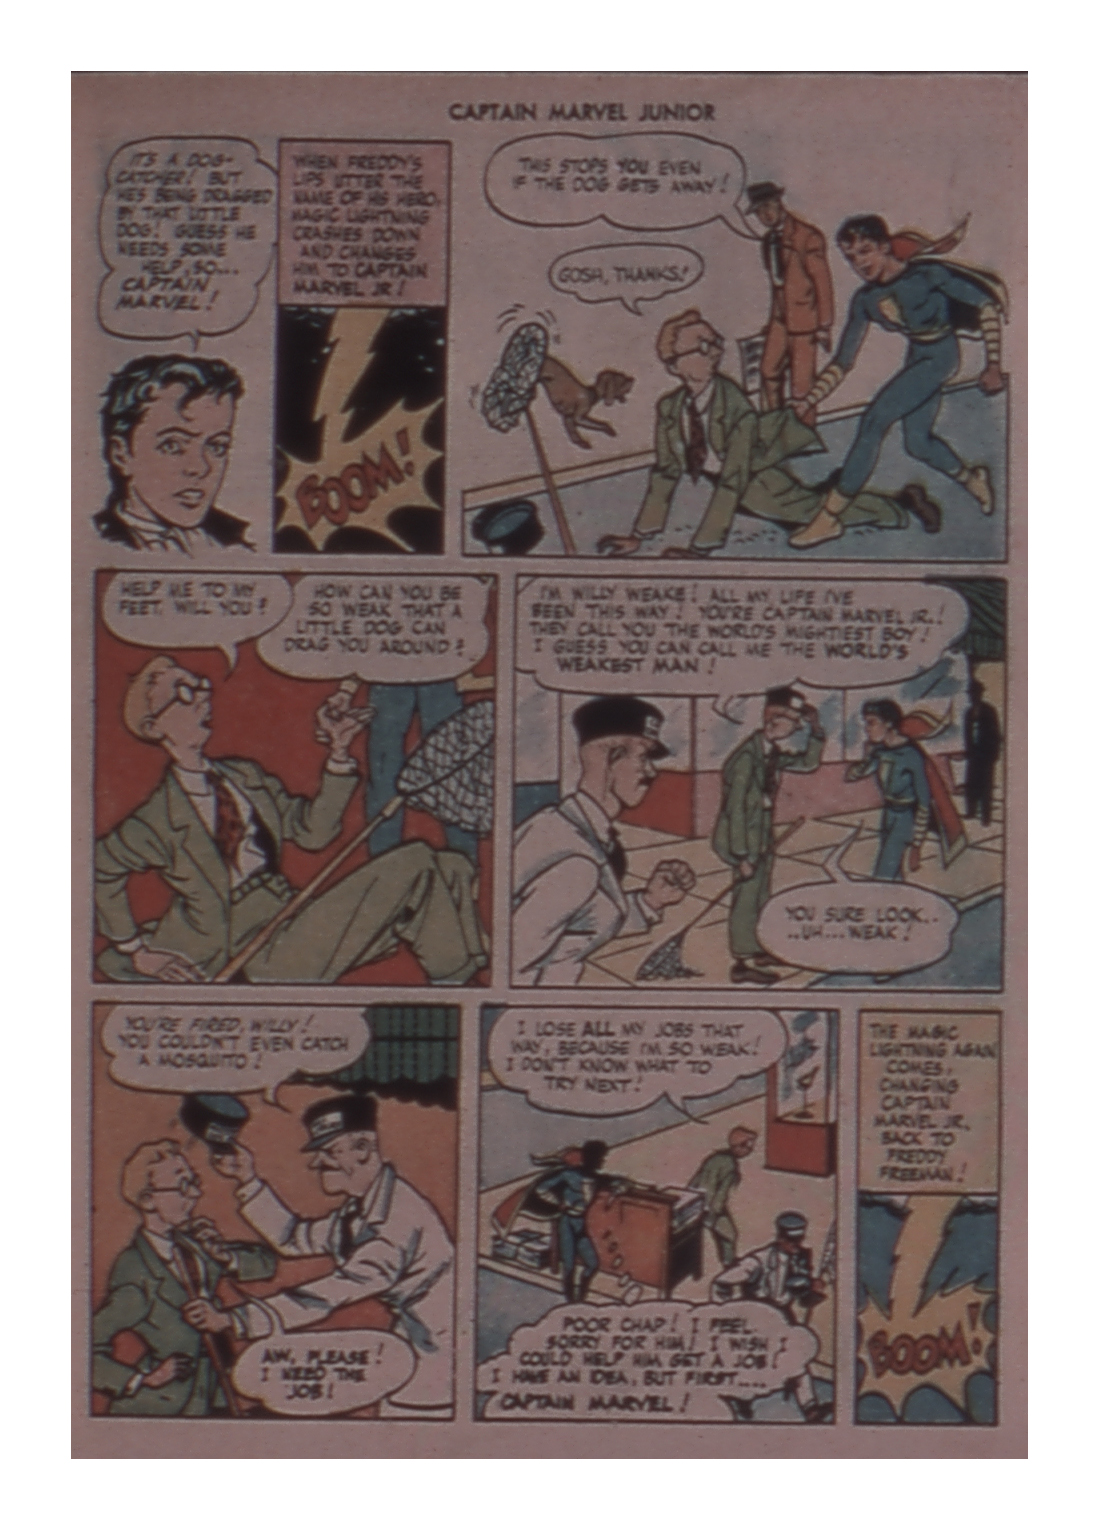 Read online Captain Marvel, Jr. comic -  Issue #50 - 17